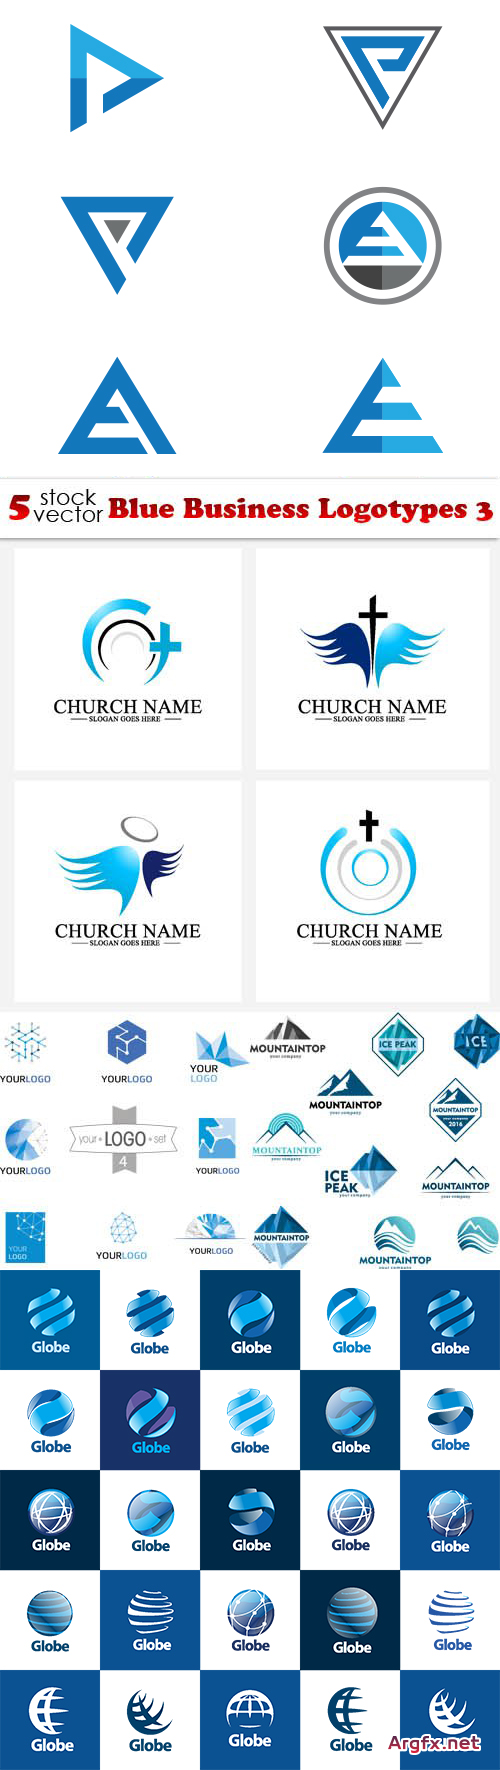 Vectors - Blue Business Logotypes 3